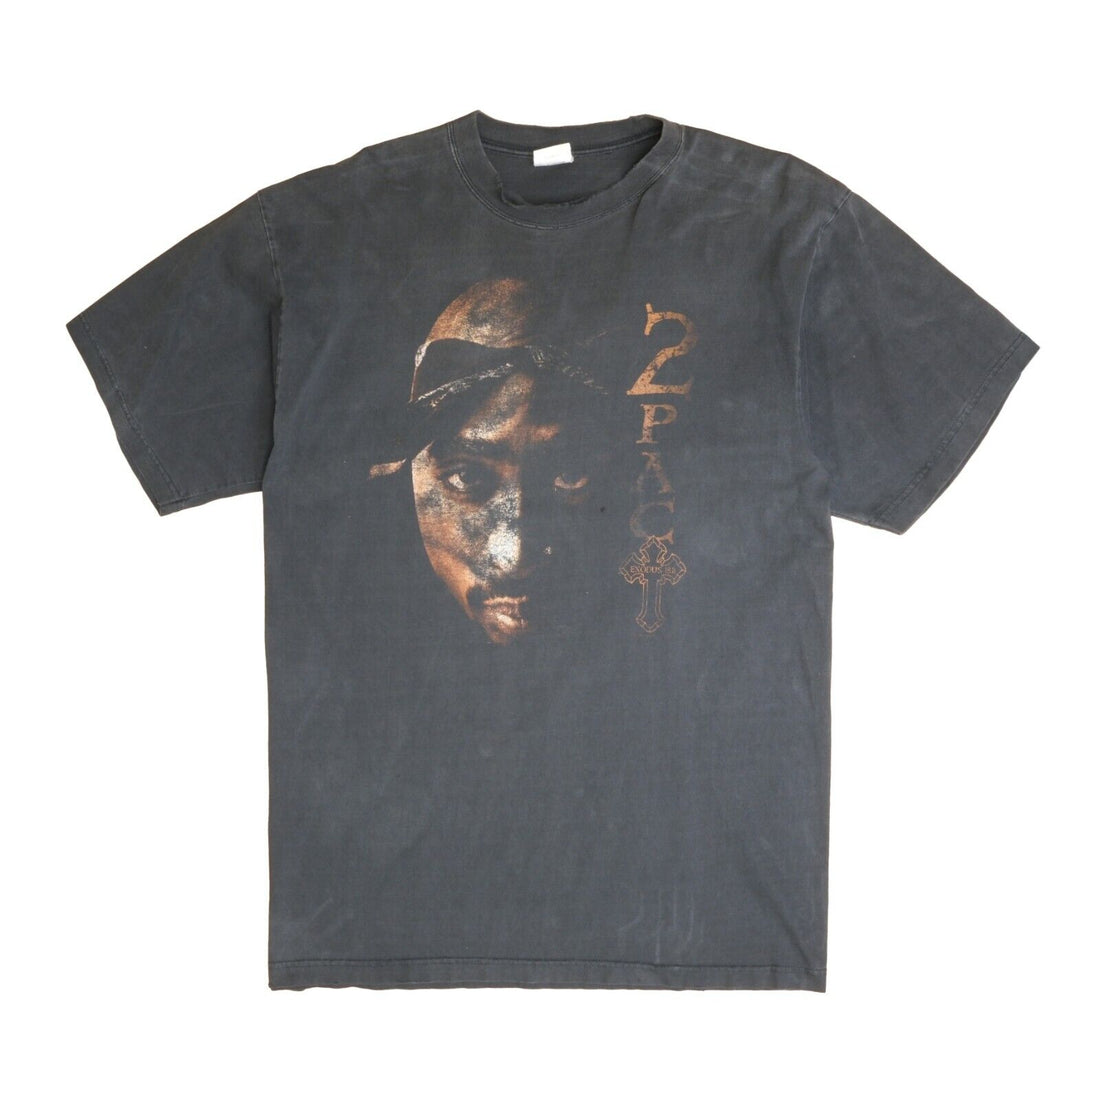 Vintage Tupac Exodus 18:11 T-Shirt Size Large 2Pac Hip Hop Rap Tee